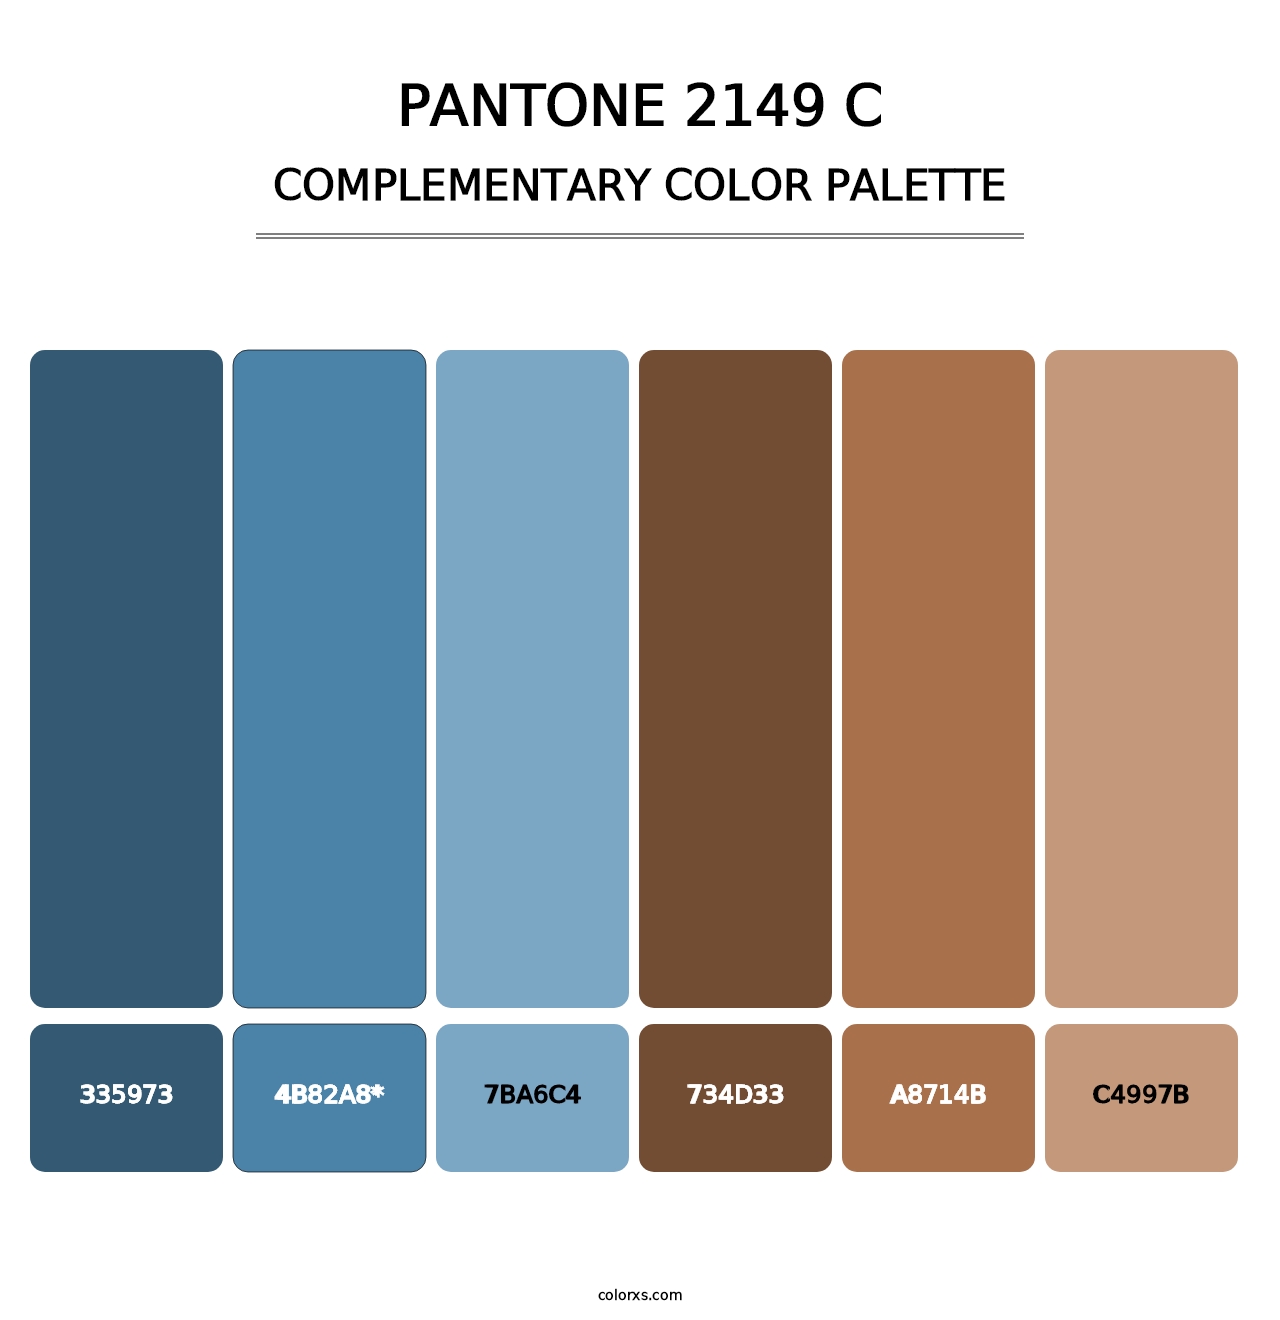 PANTONE 2149 C - Complementary Color Palette